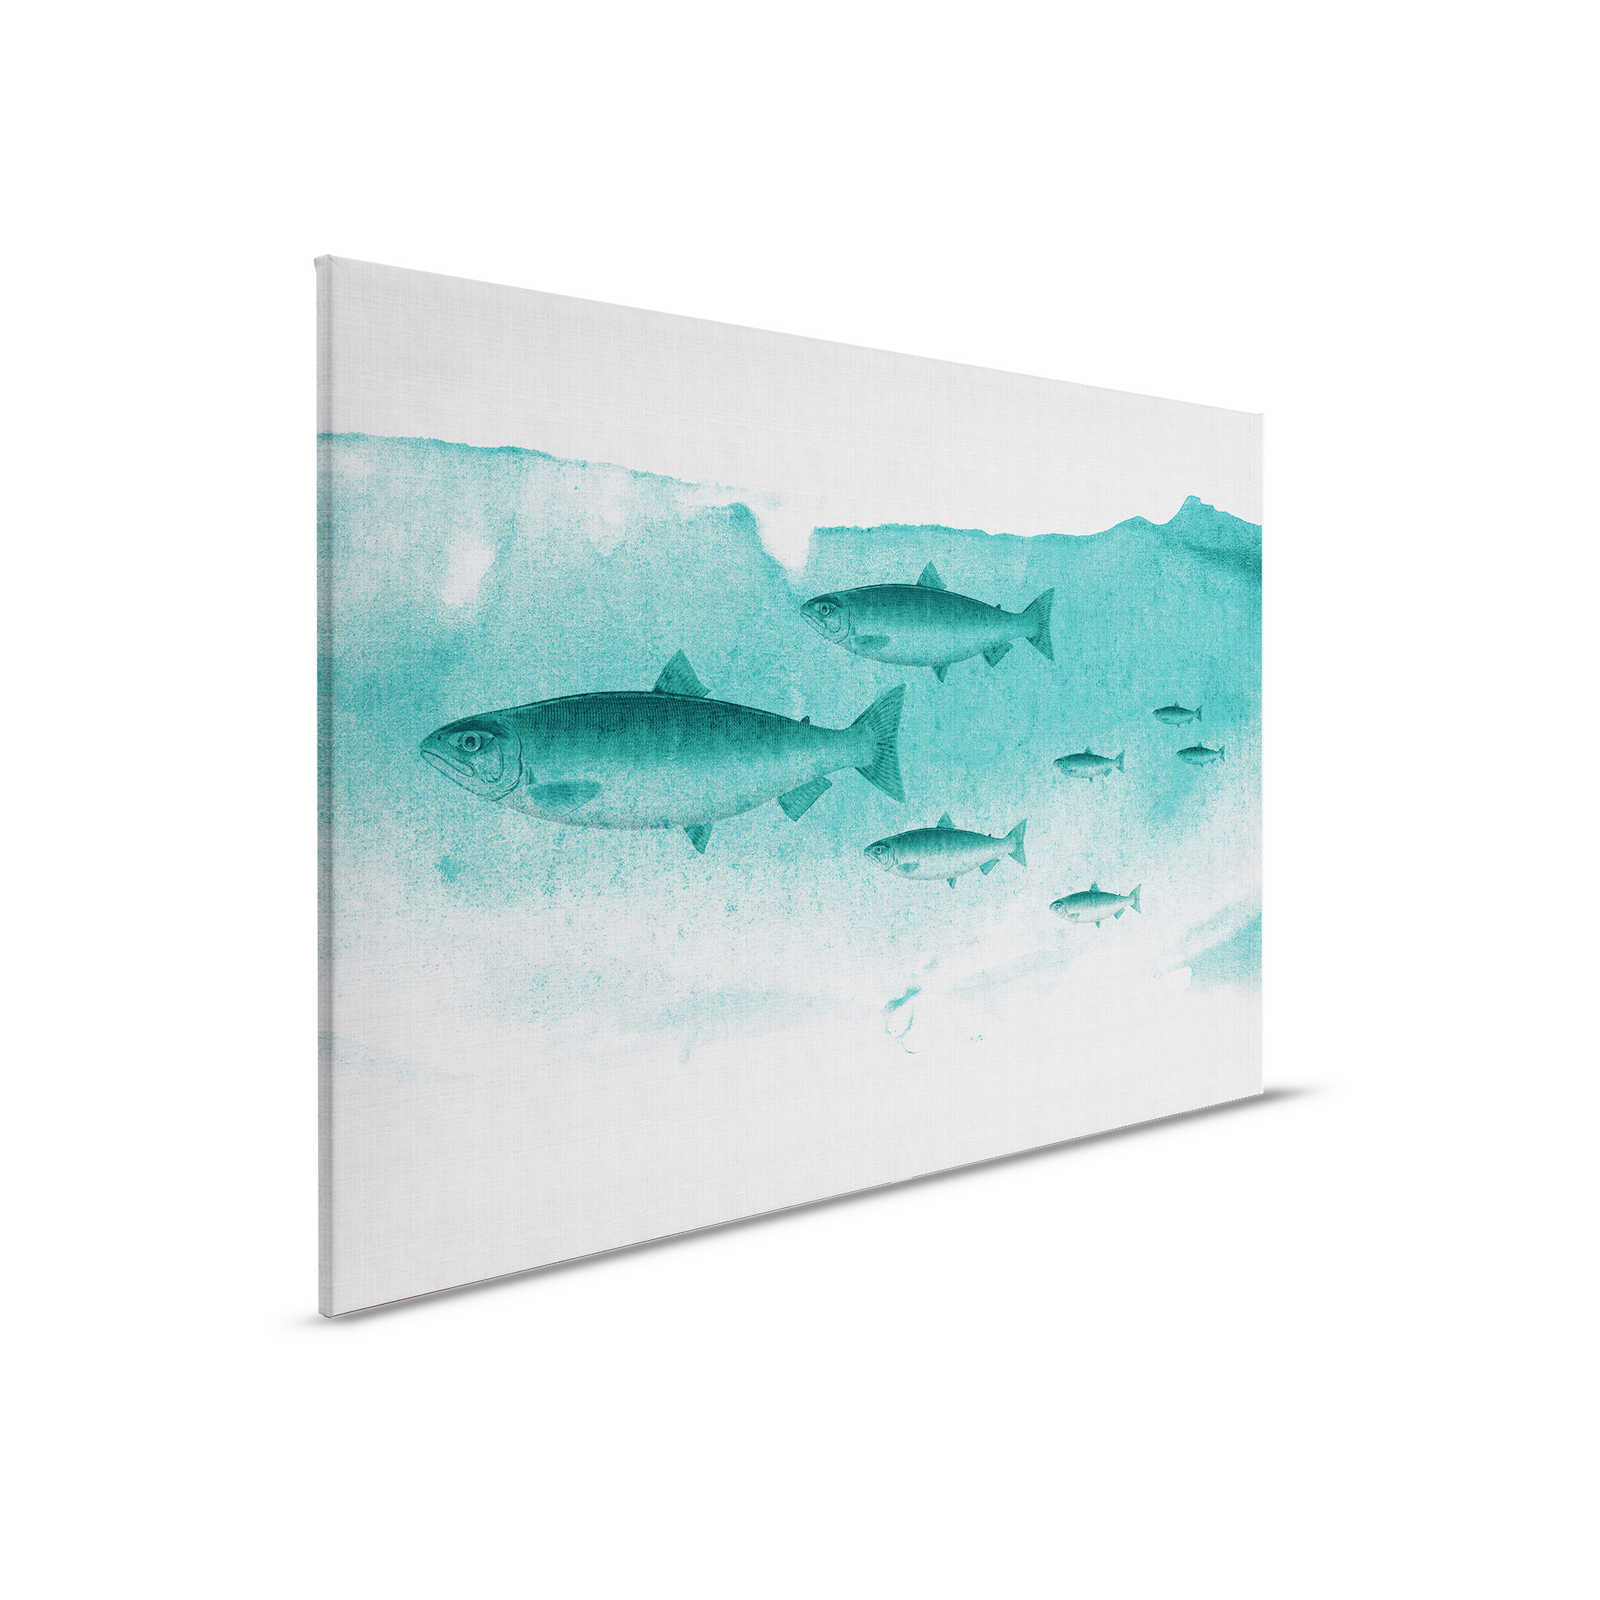 Into the blue 2 - Acuarela de peces en verde como cuadro de lienzo - estructura de lino natural - 0,90 m x 0,60 m
